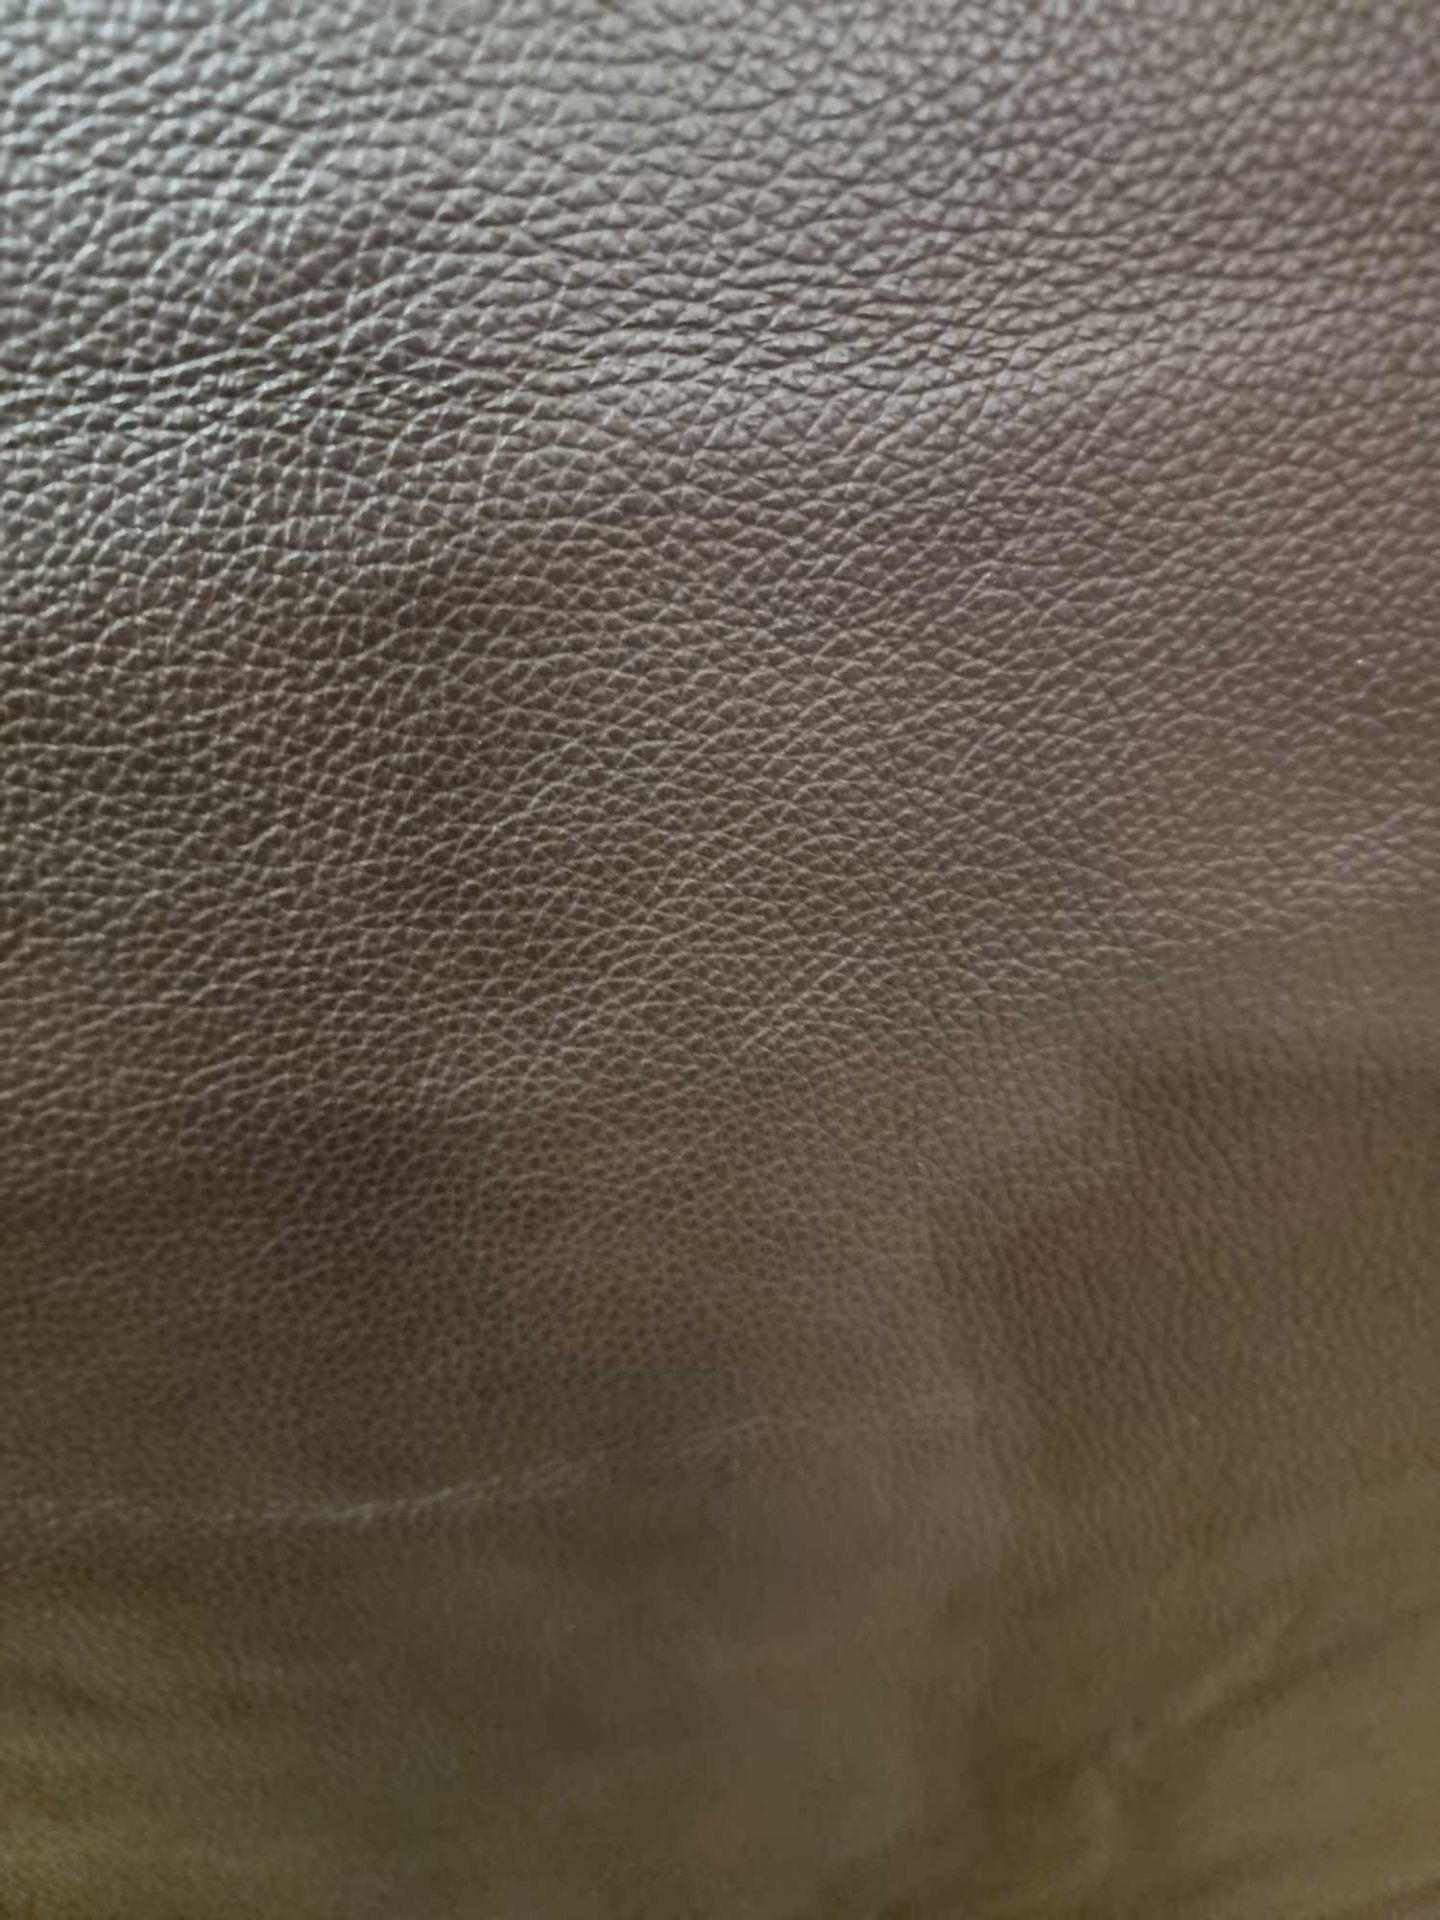 Mastrotto Dakota Chocolate Leather Hide approximately 3 78M2 2 1 x 1 8cm ( Hide No,108) - Image 2 of 2